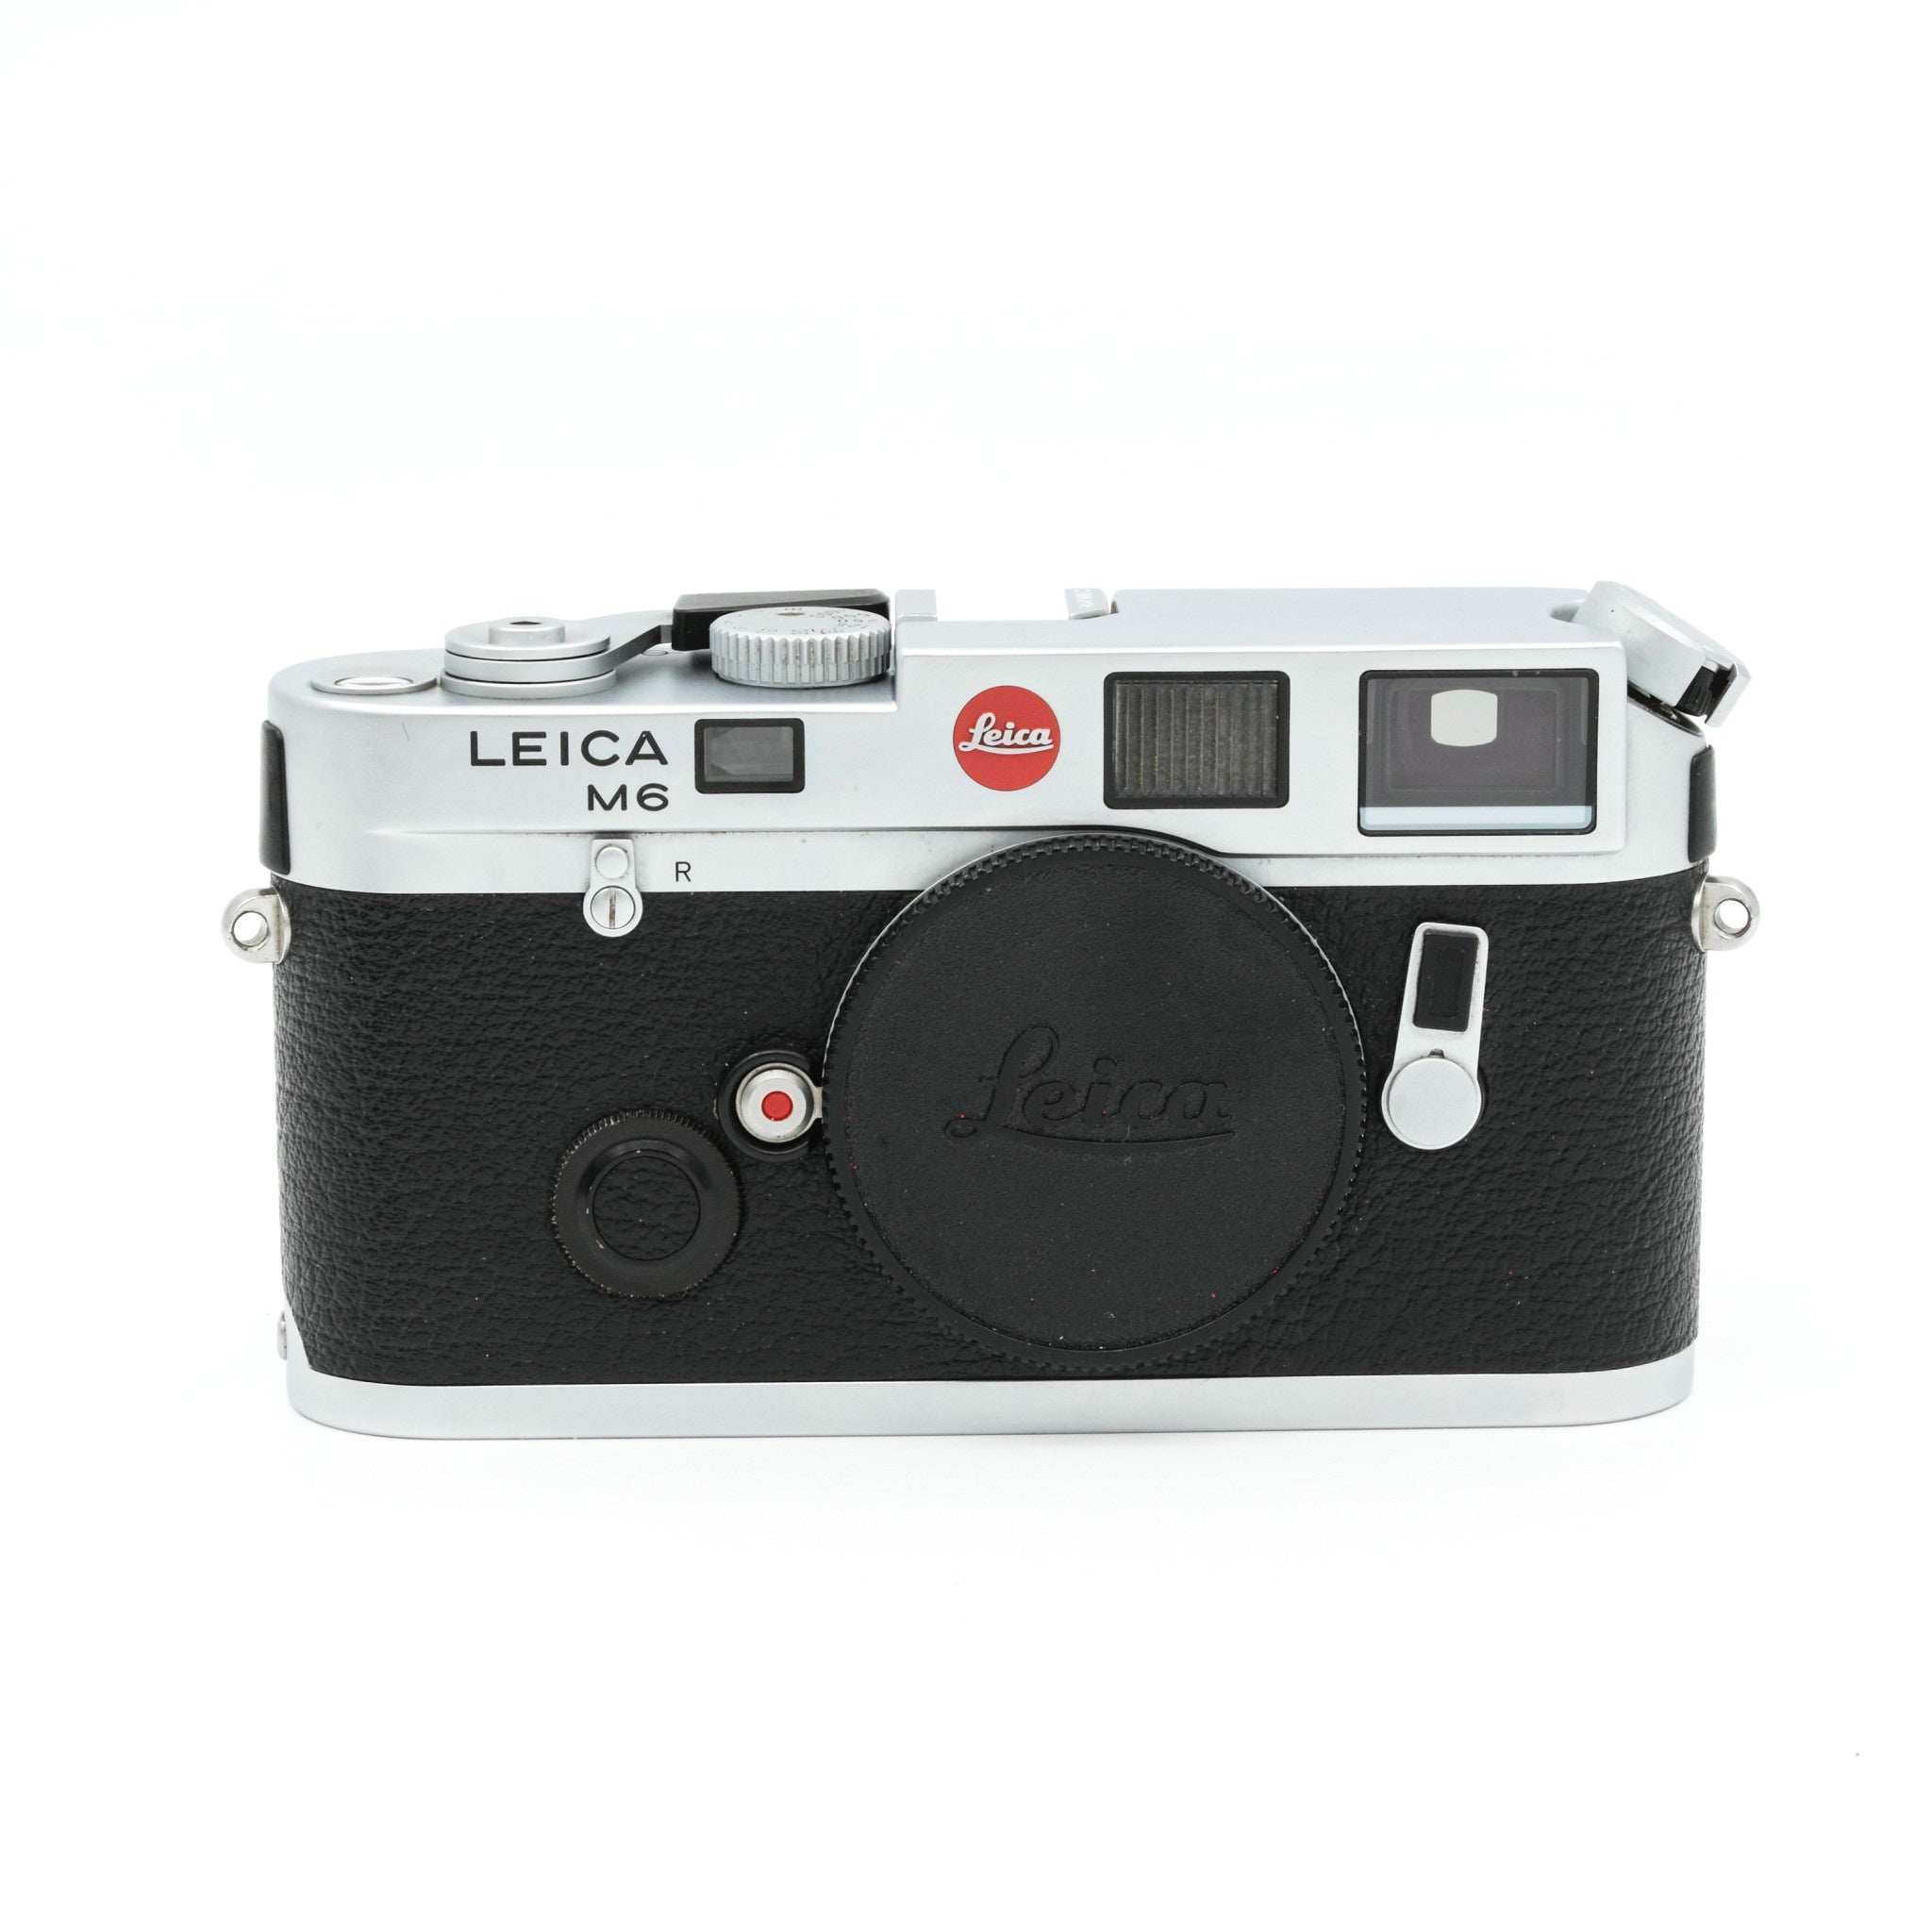 Pre Owned Leica M6, silver chrome 2184754 x1976/1